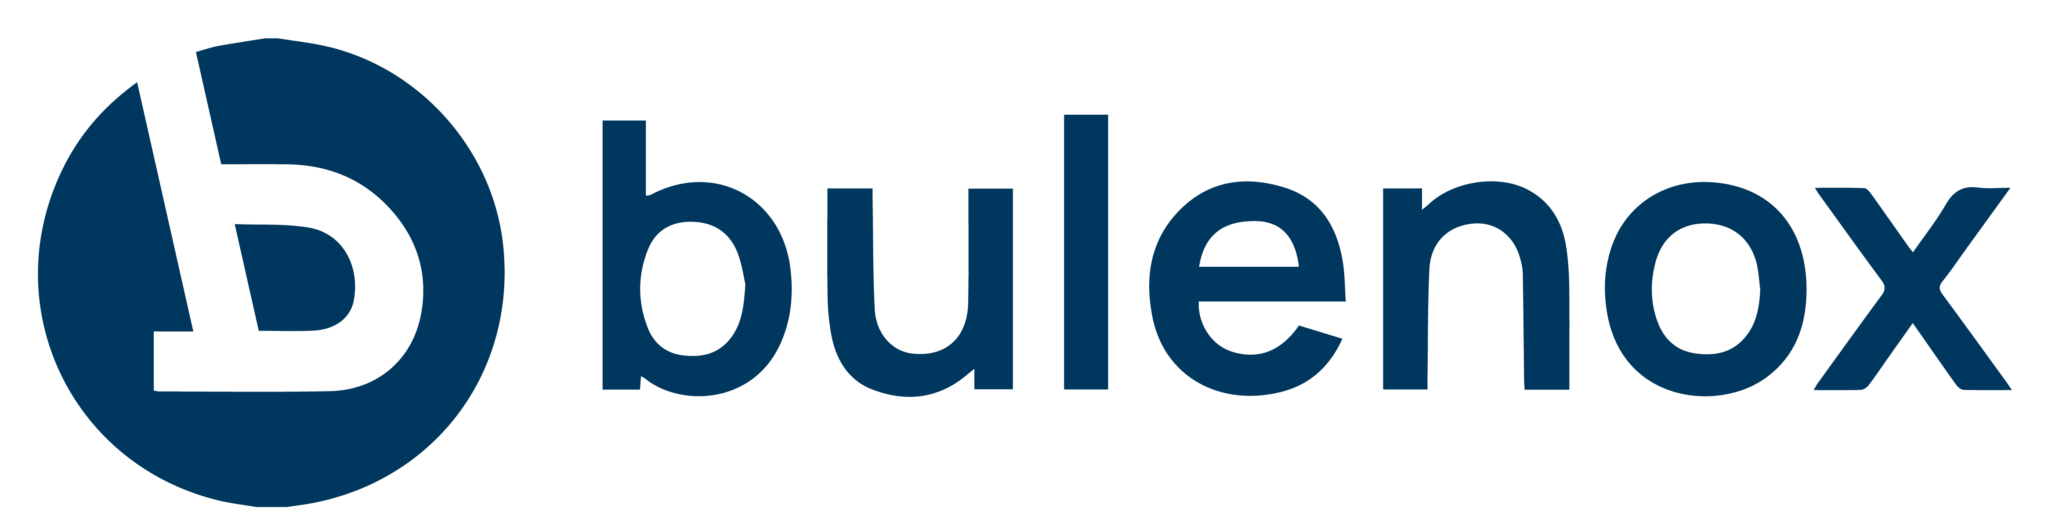 Bulenox Logo